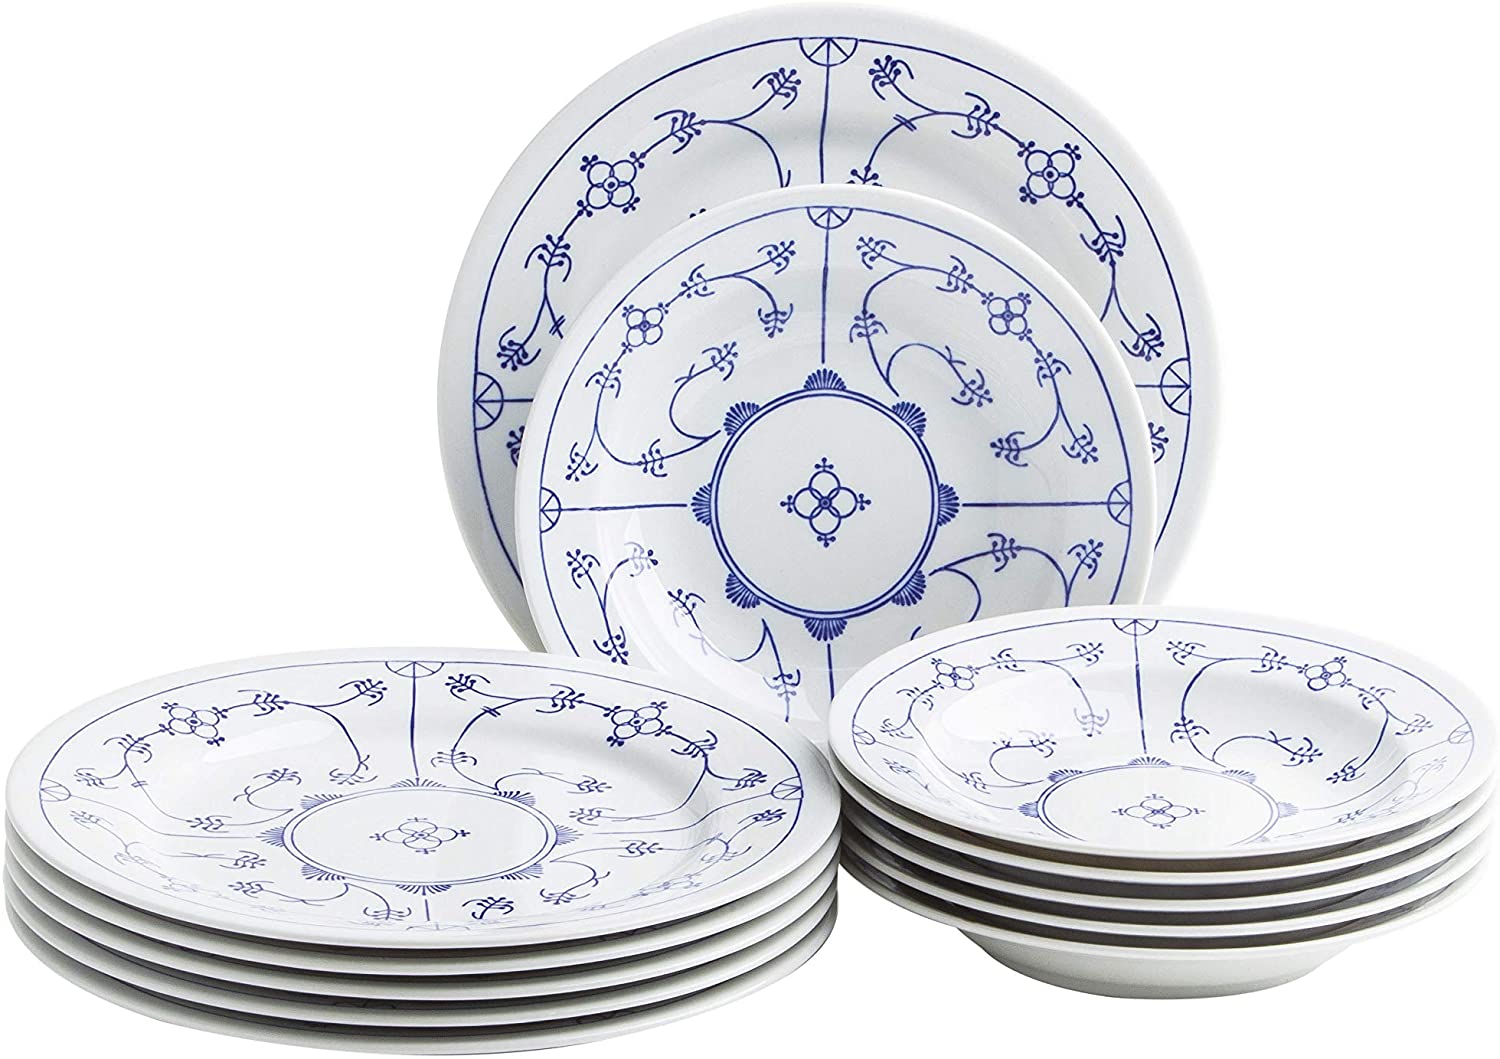 Kahla 160620O75019H Blau Saks 12-Piece Porcelain Tableware Set, Set of Plates For 6 People, Blue and White, Round, Soup Bowl 22 cm, Dinner Plate 23.5 cm